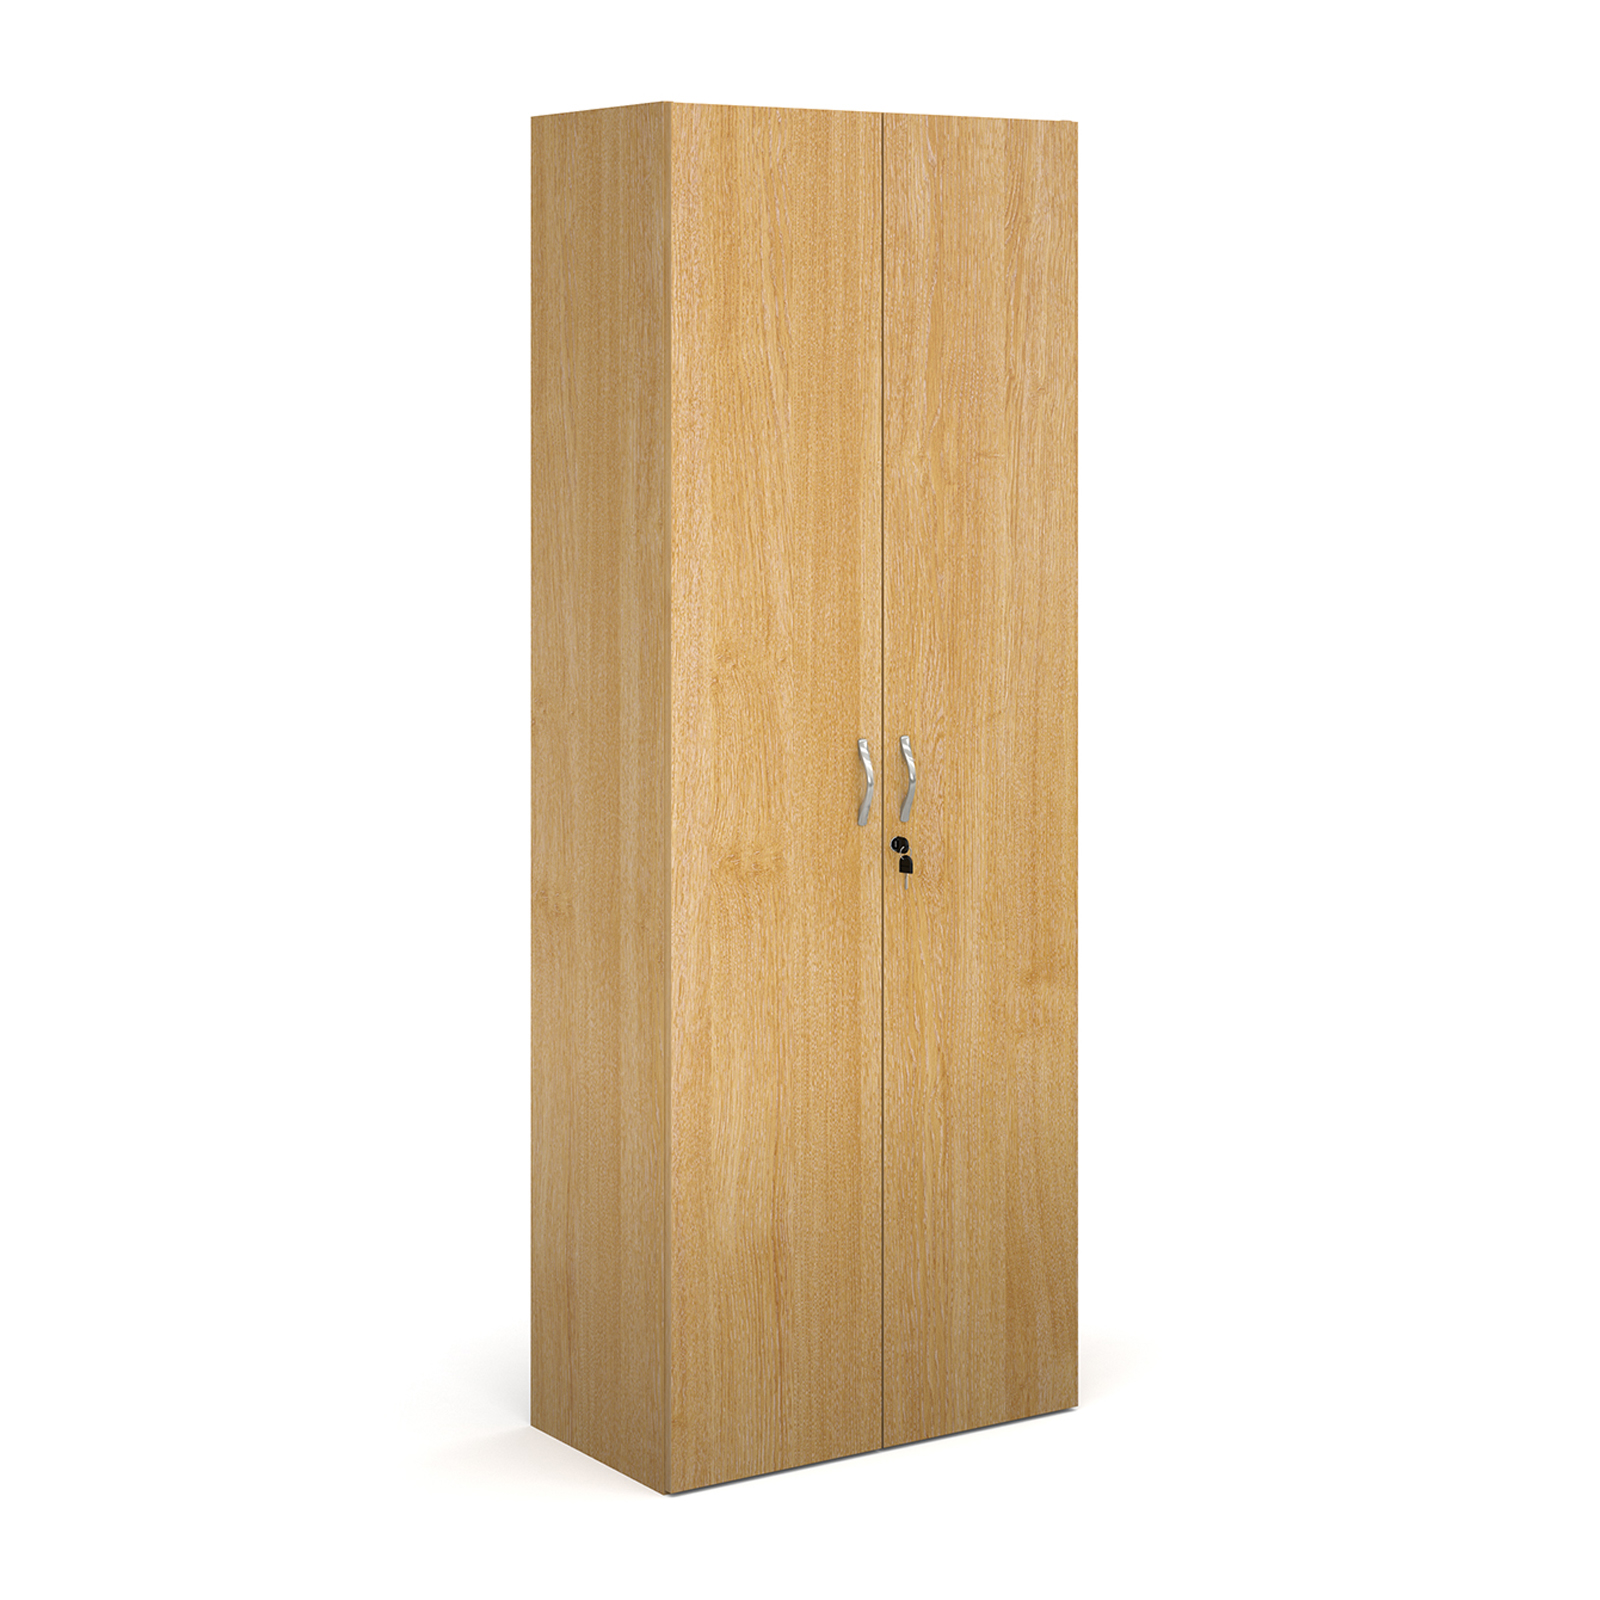 Value Line Classic+ Double Door Office Cupboards, 4 Shelf - 76wx39dx203h (cm), Oak